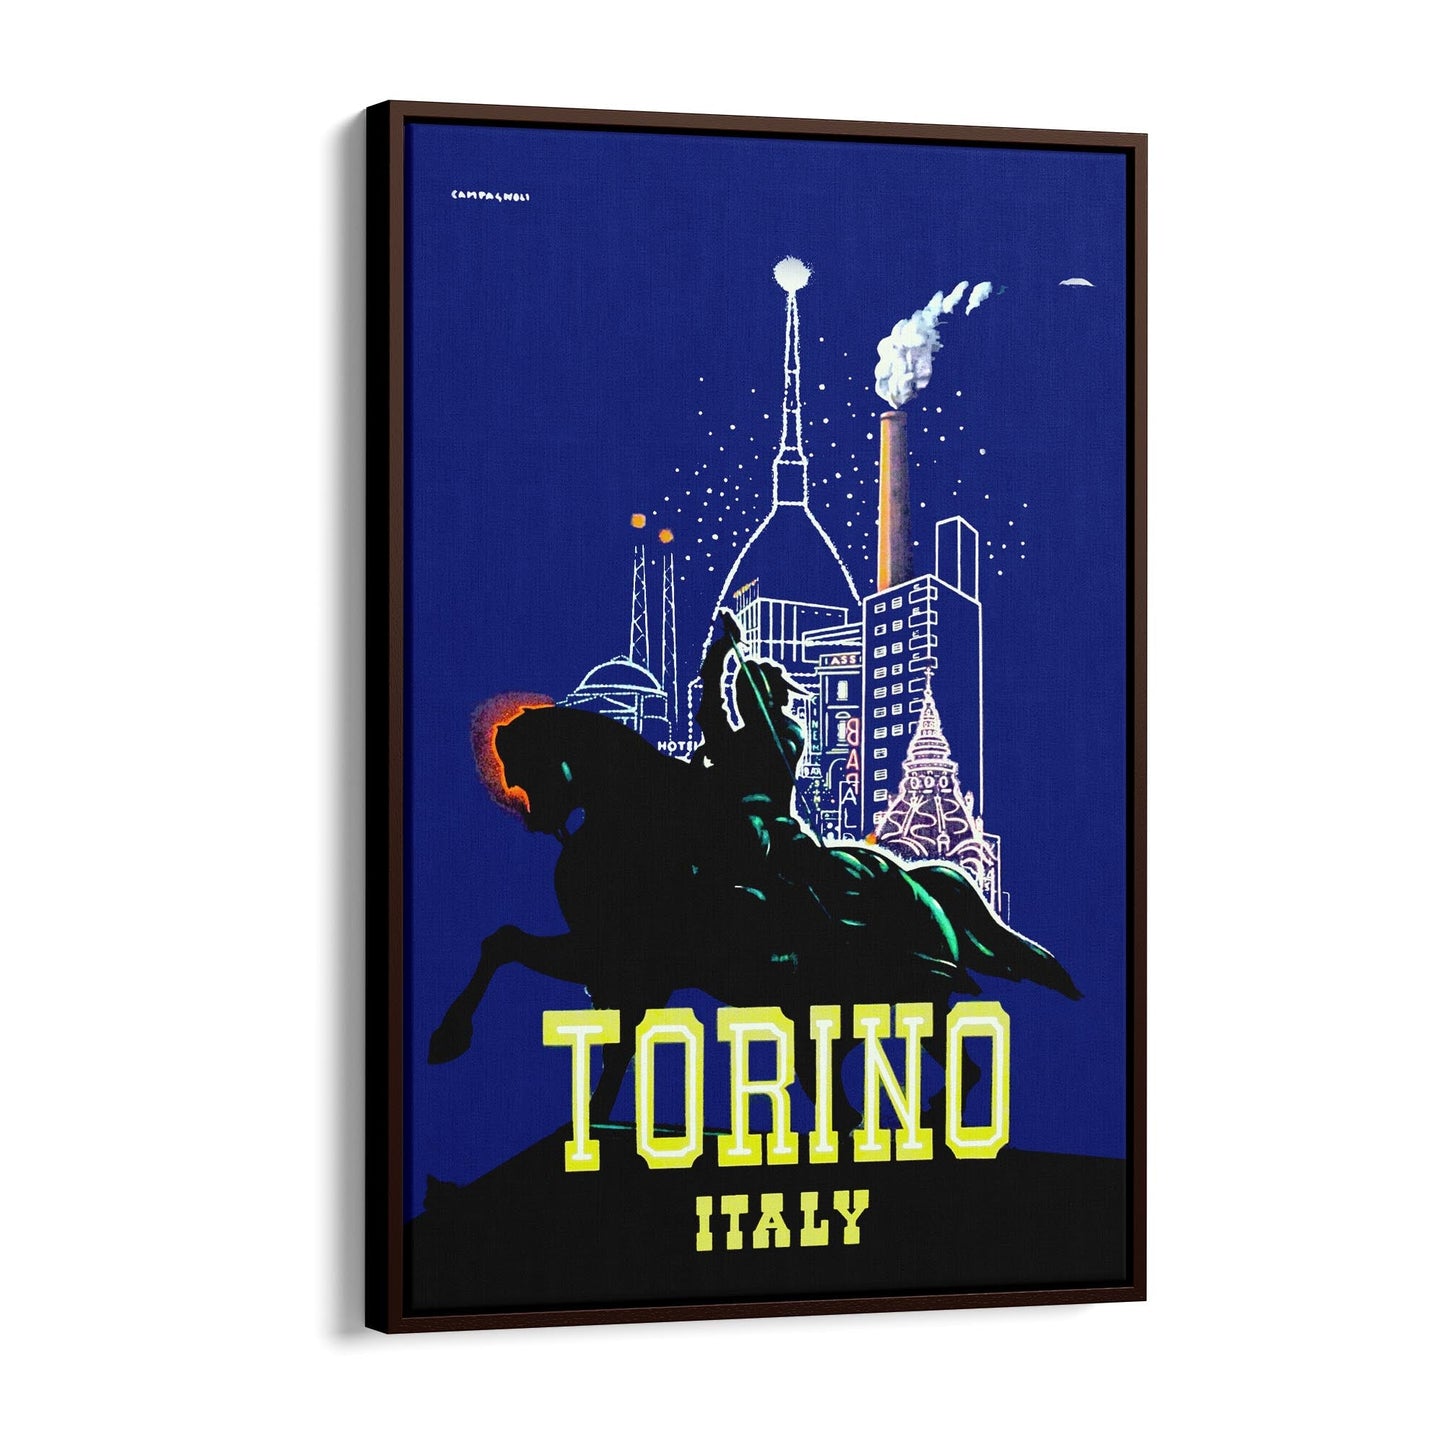 Torino, Italy by Adalberto Campagnoli | Framed Canvas Vintage Travel Advertisement